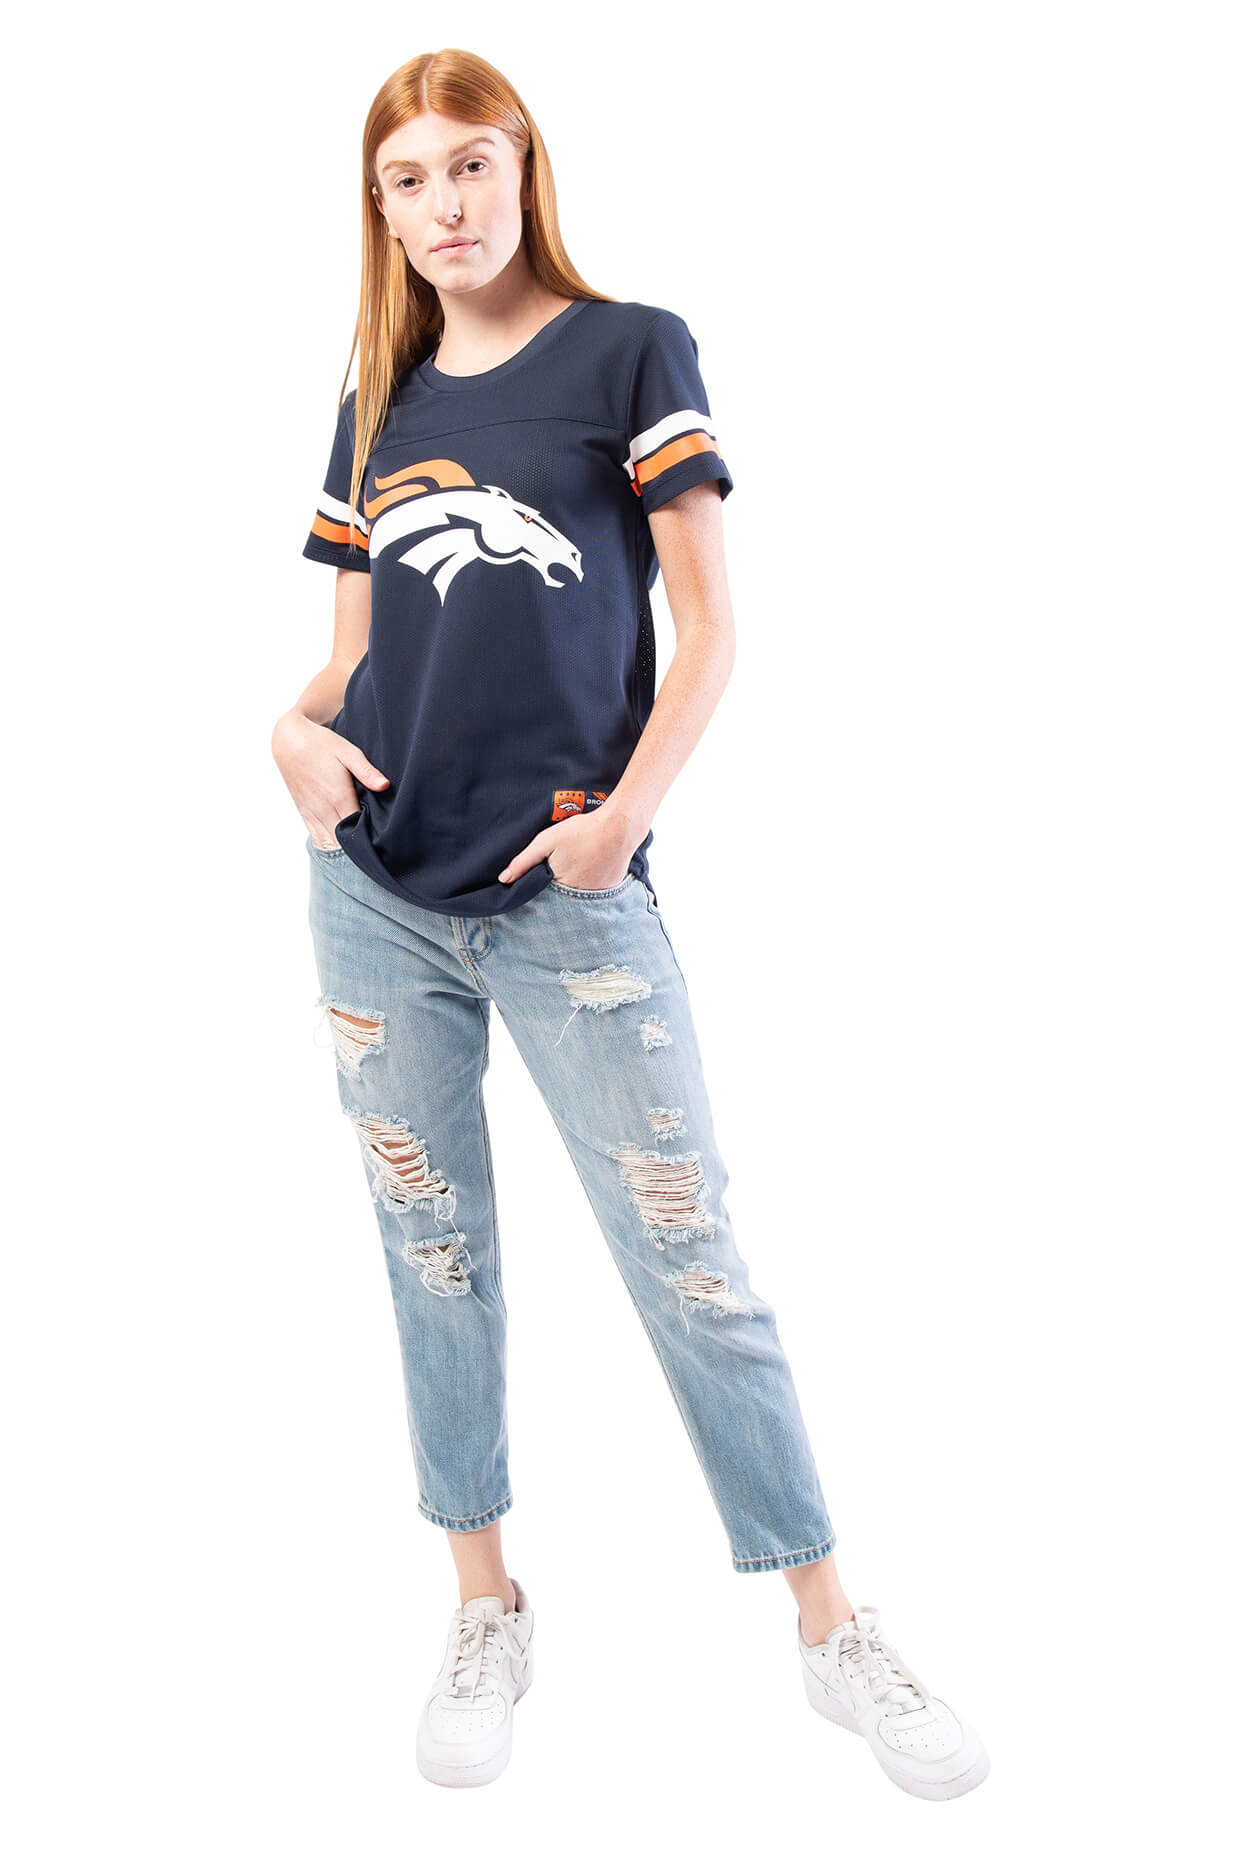 NFL Denver Broncos Women's Varsity Stripe Tee|Denver Broncos